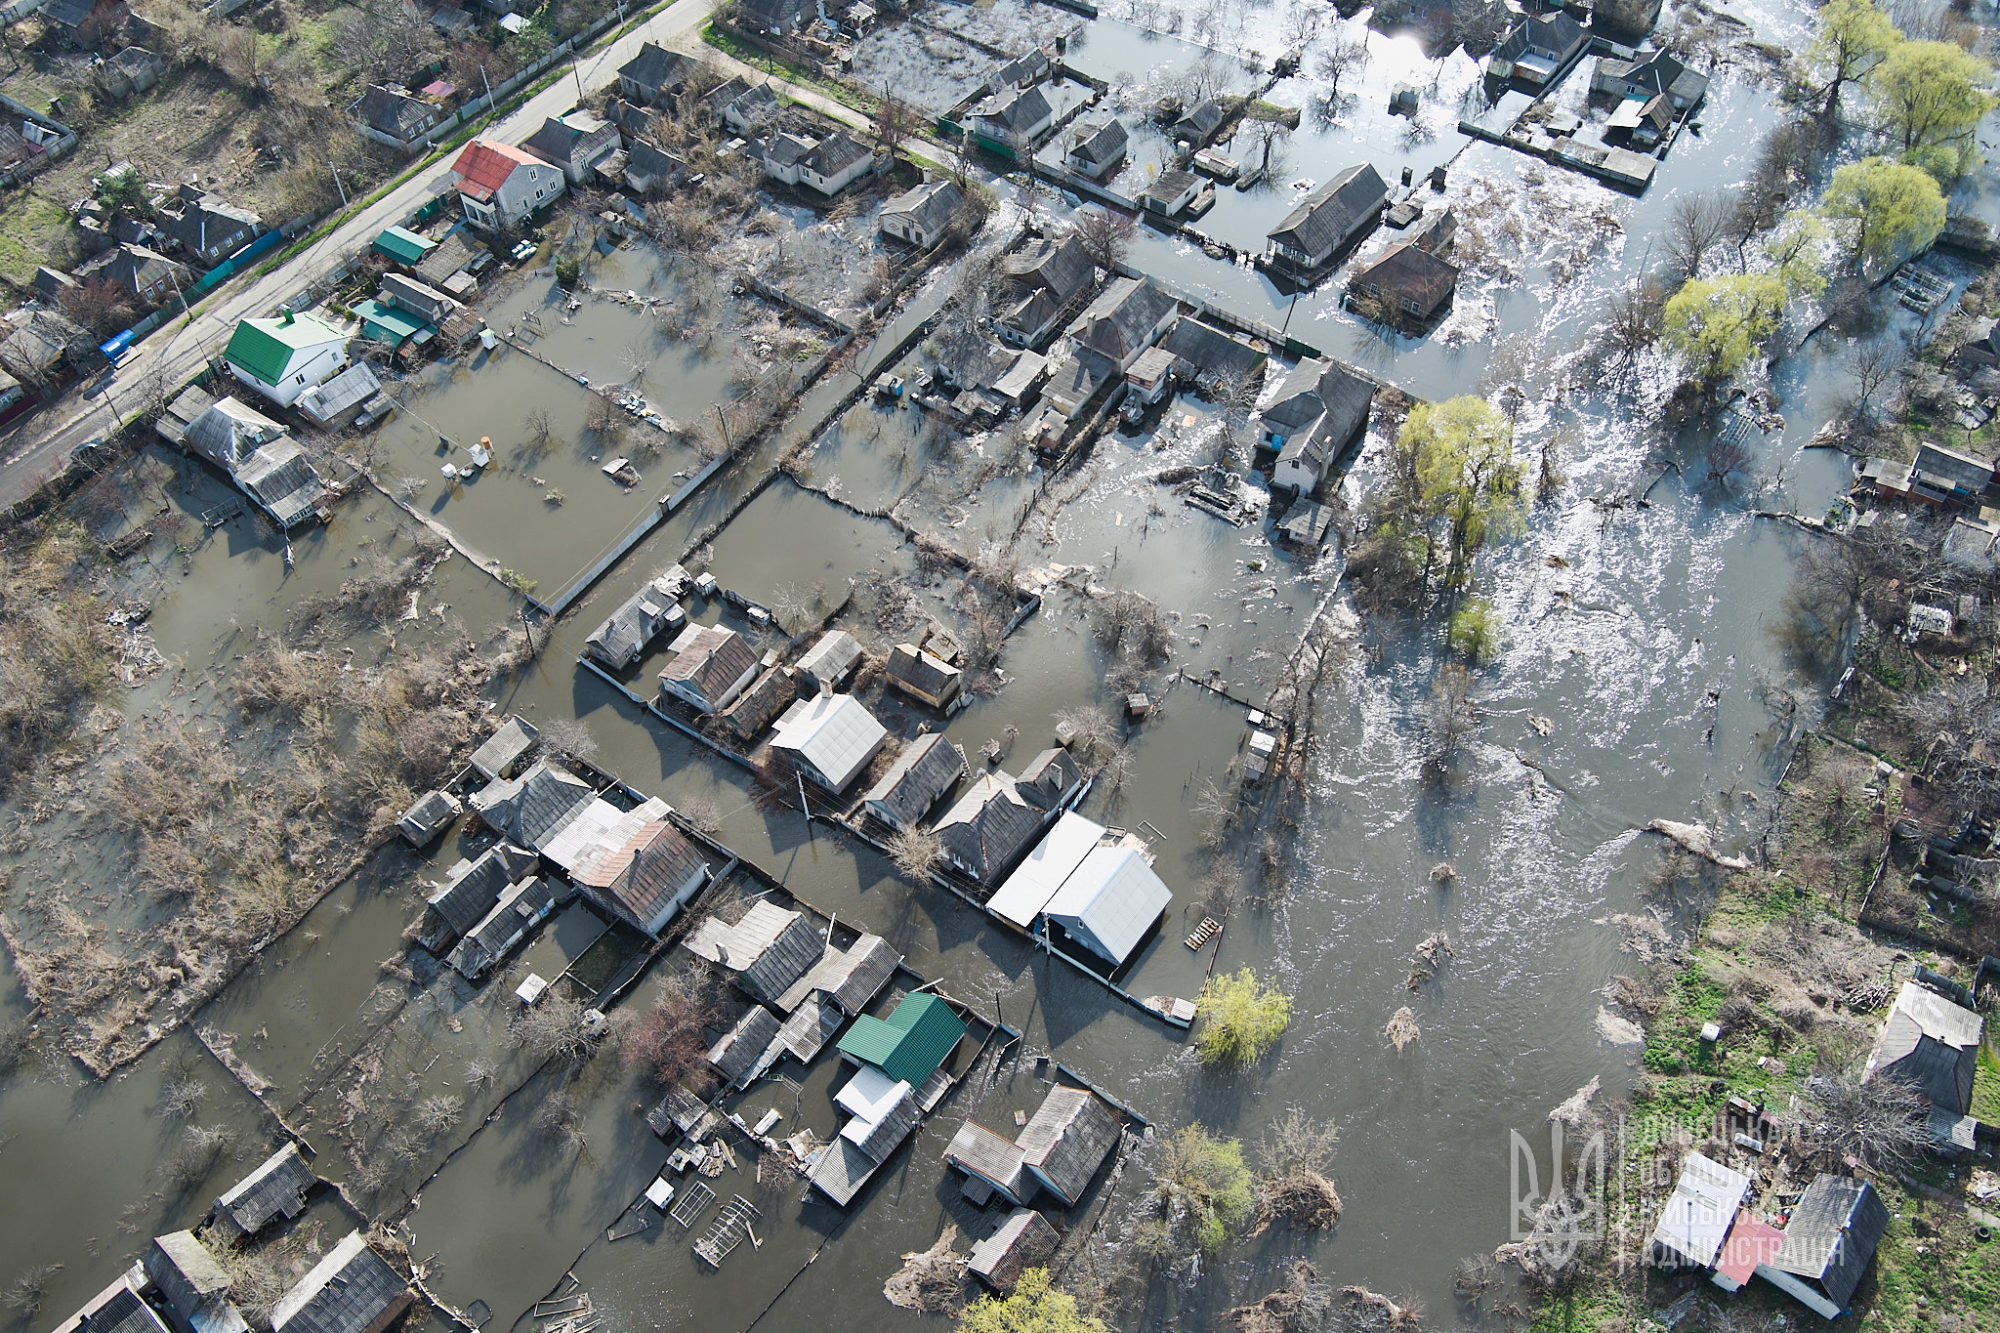 Из-за прорыва дамбы под Краматорском затопило около 260 домов на 30 улицах, — глава области (ФОТО) 2